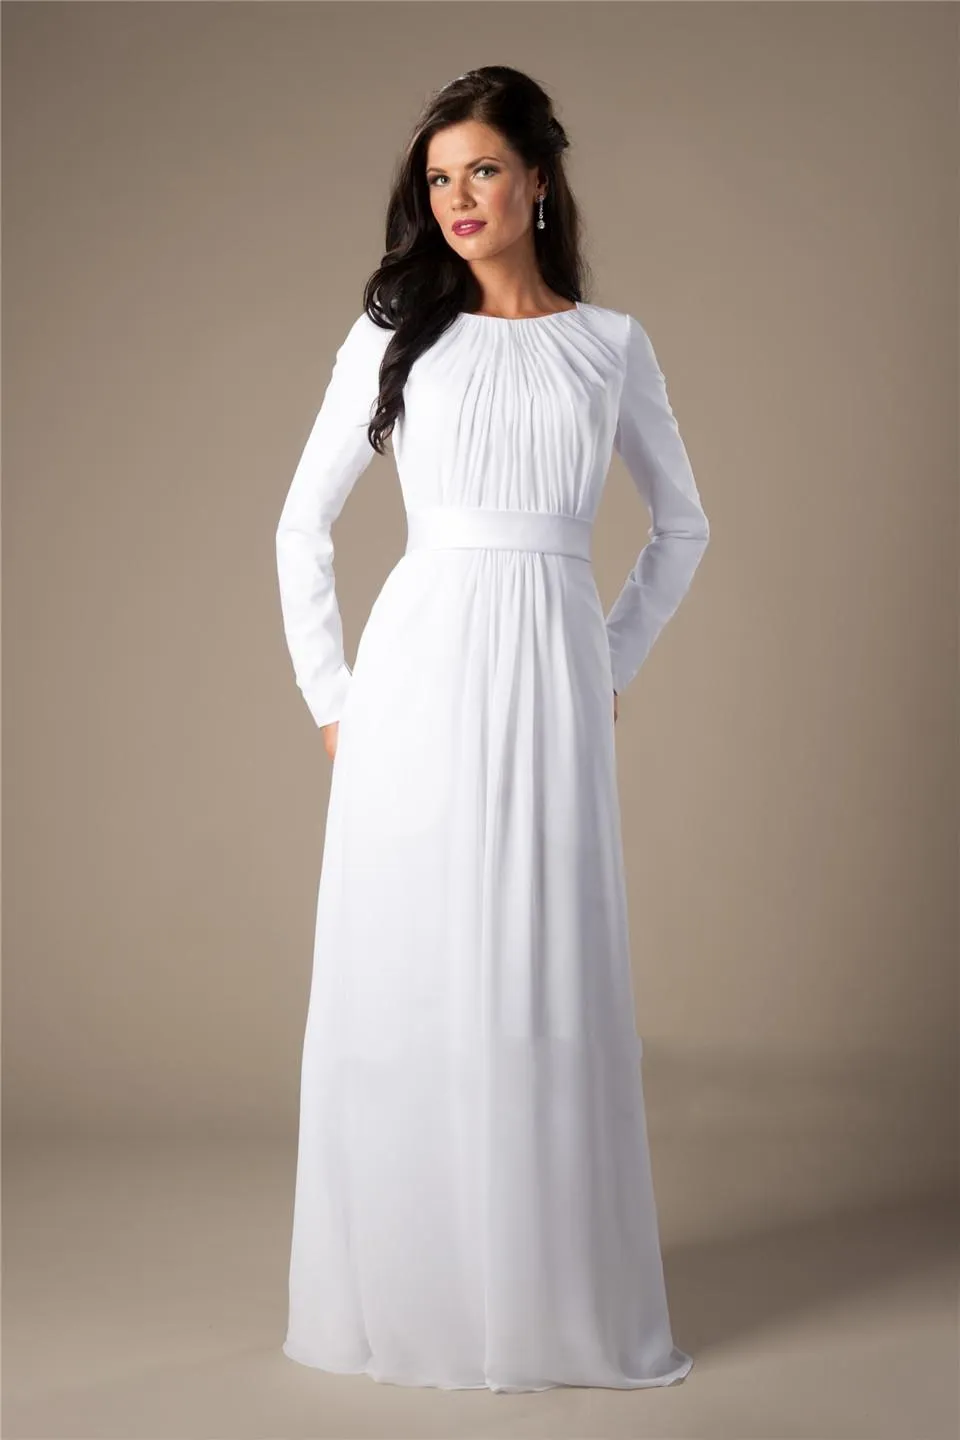 Vestido de Noiva 긴 라인과 간단한 시폰 비치 겸손 웨딩 드레스 높은 목 A 라인 길이 길이 사원 신부 가운